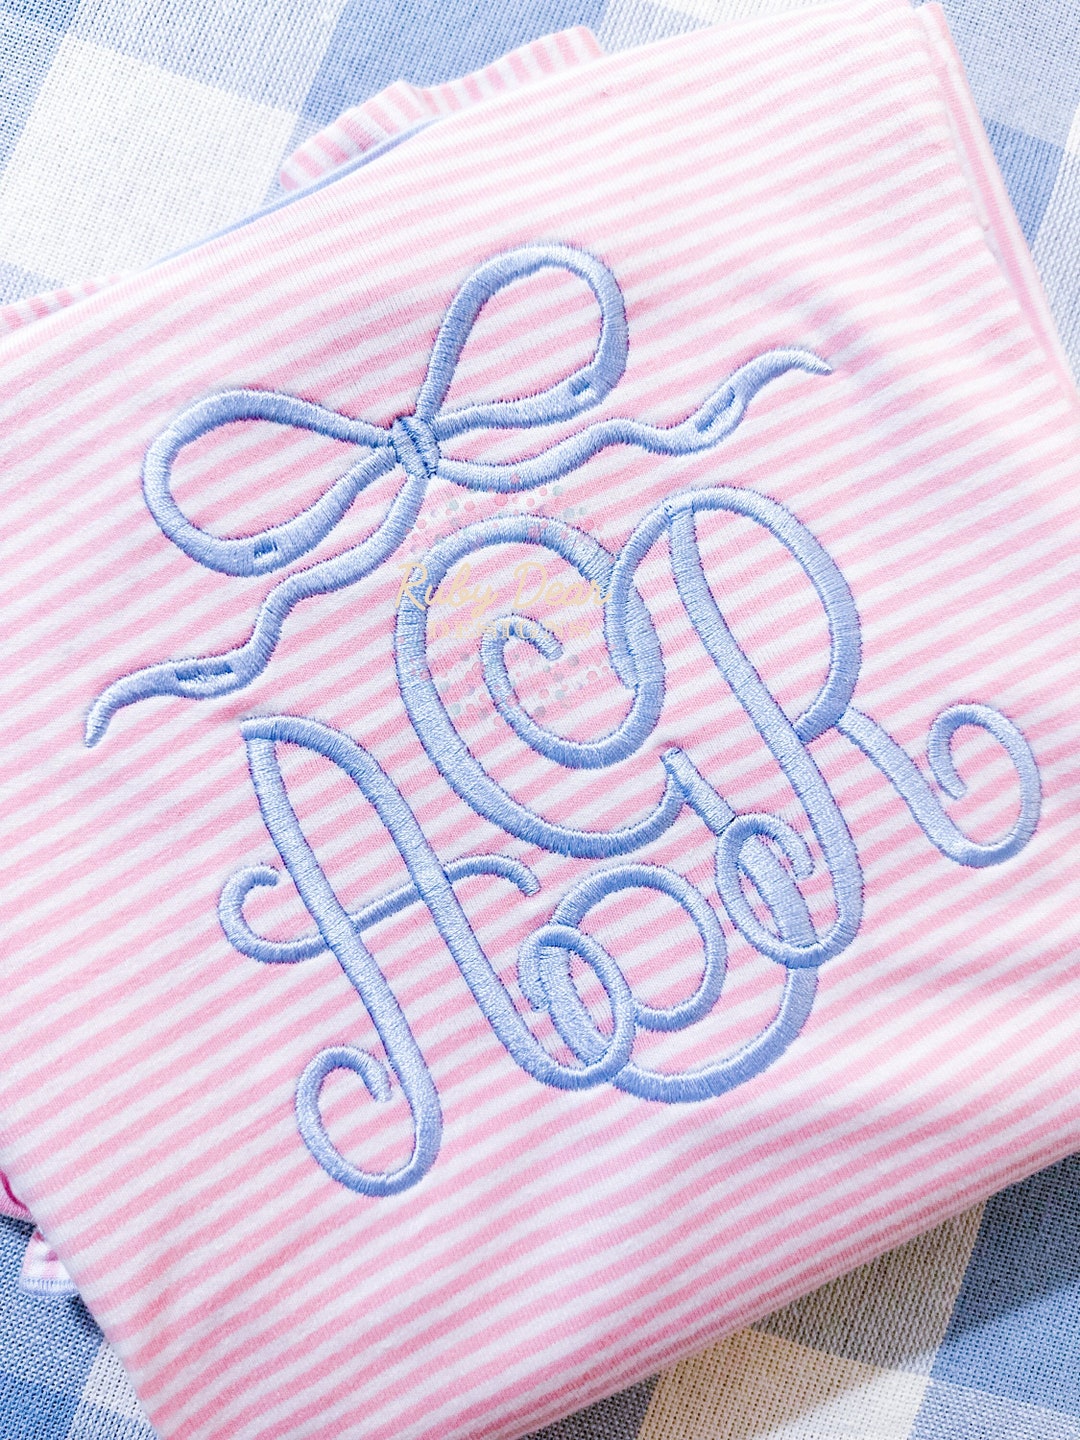 Bow Monogram Topper Satin Stitch Machine Embroidery Design - Etsy